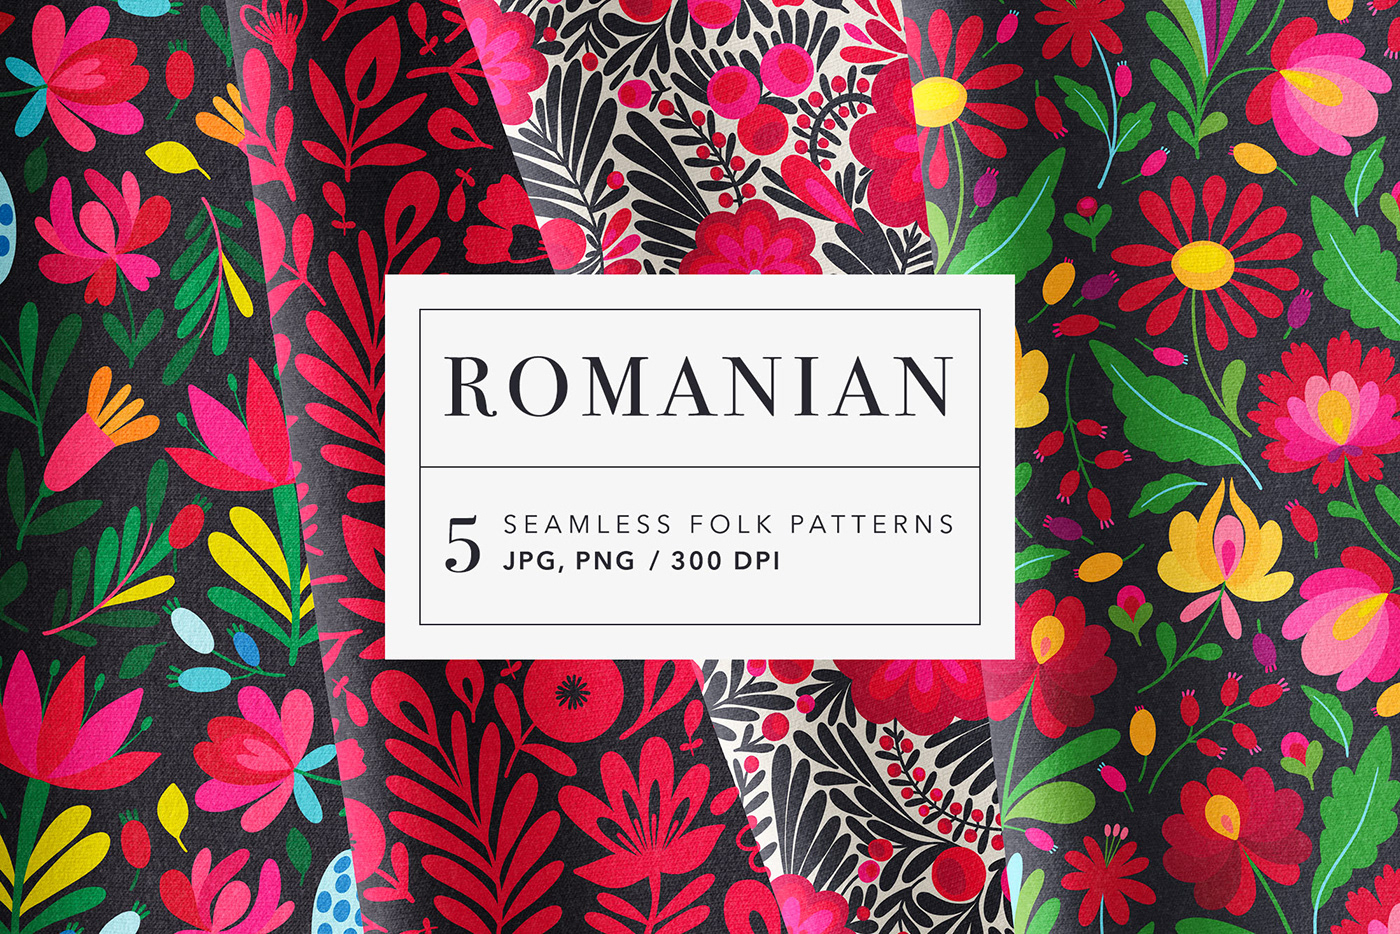 fabric fabric design floral folk art gothic pattern romania romanian textile transylvania